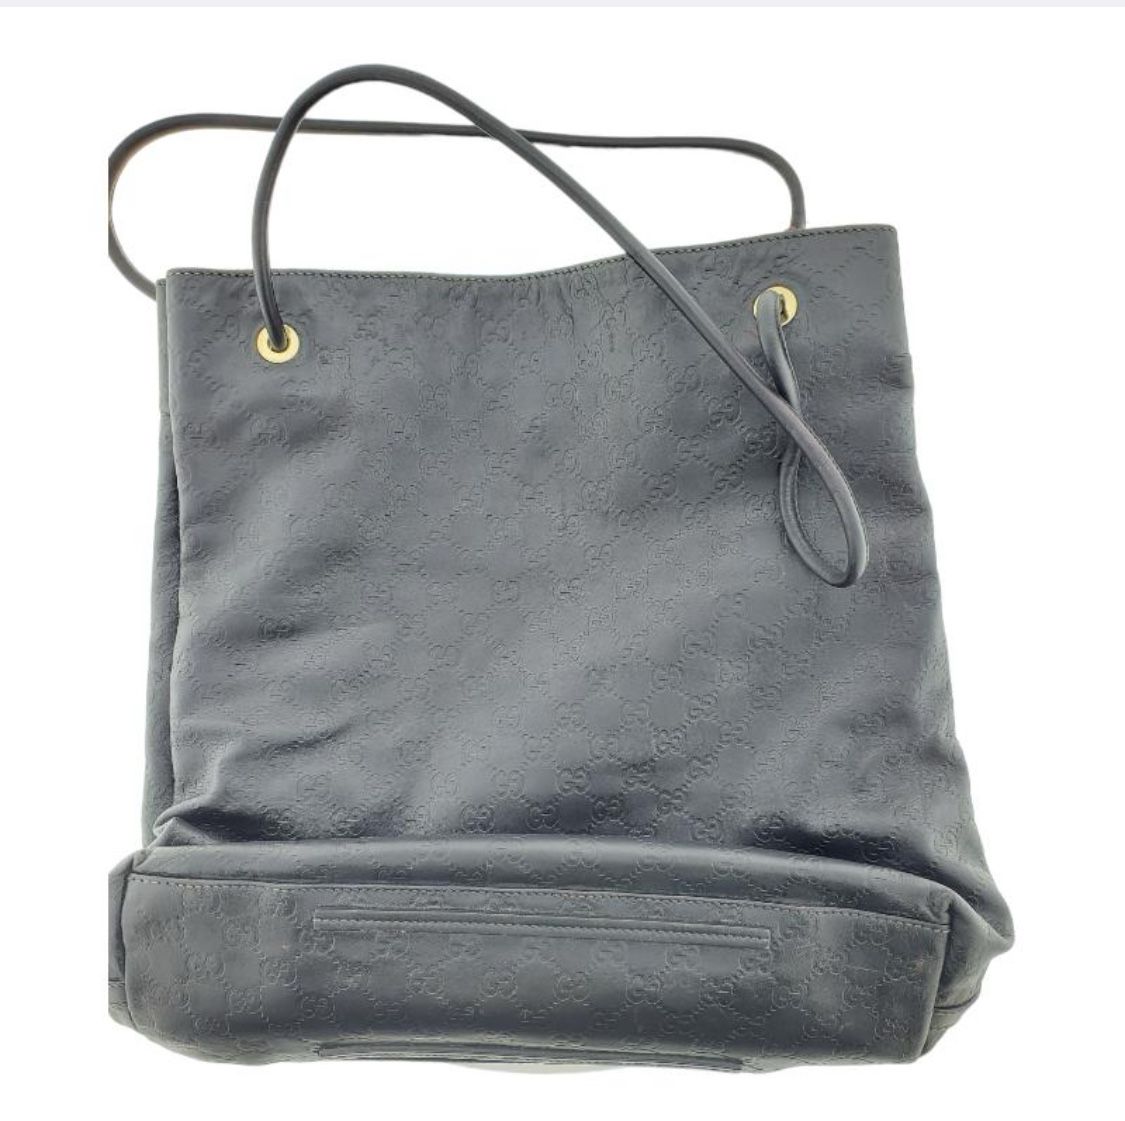 Gucci Handbag Gifford Tote Bag 